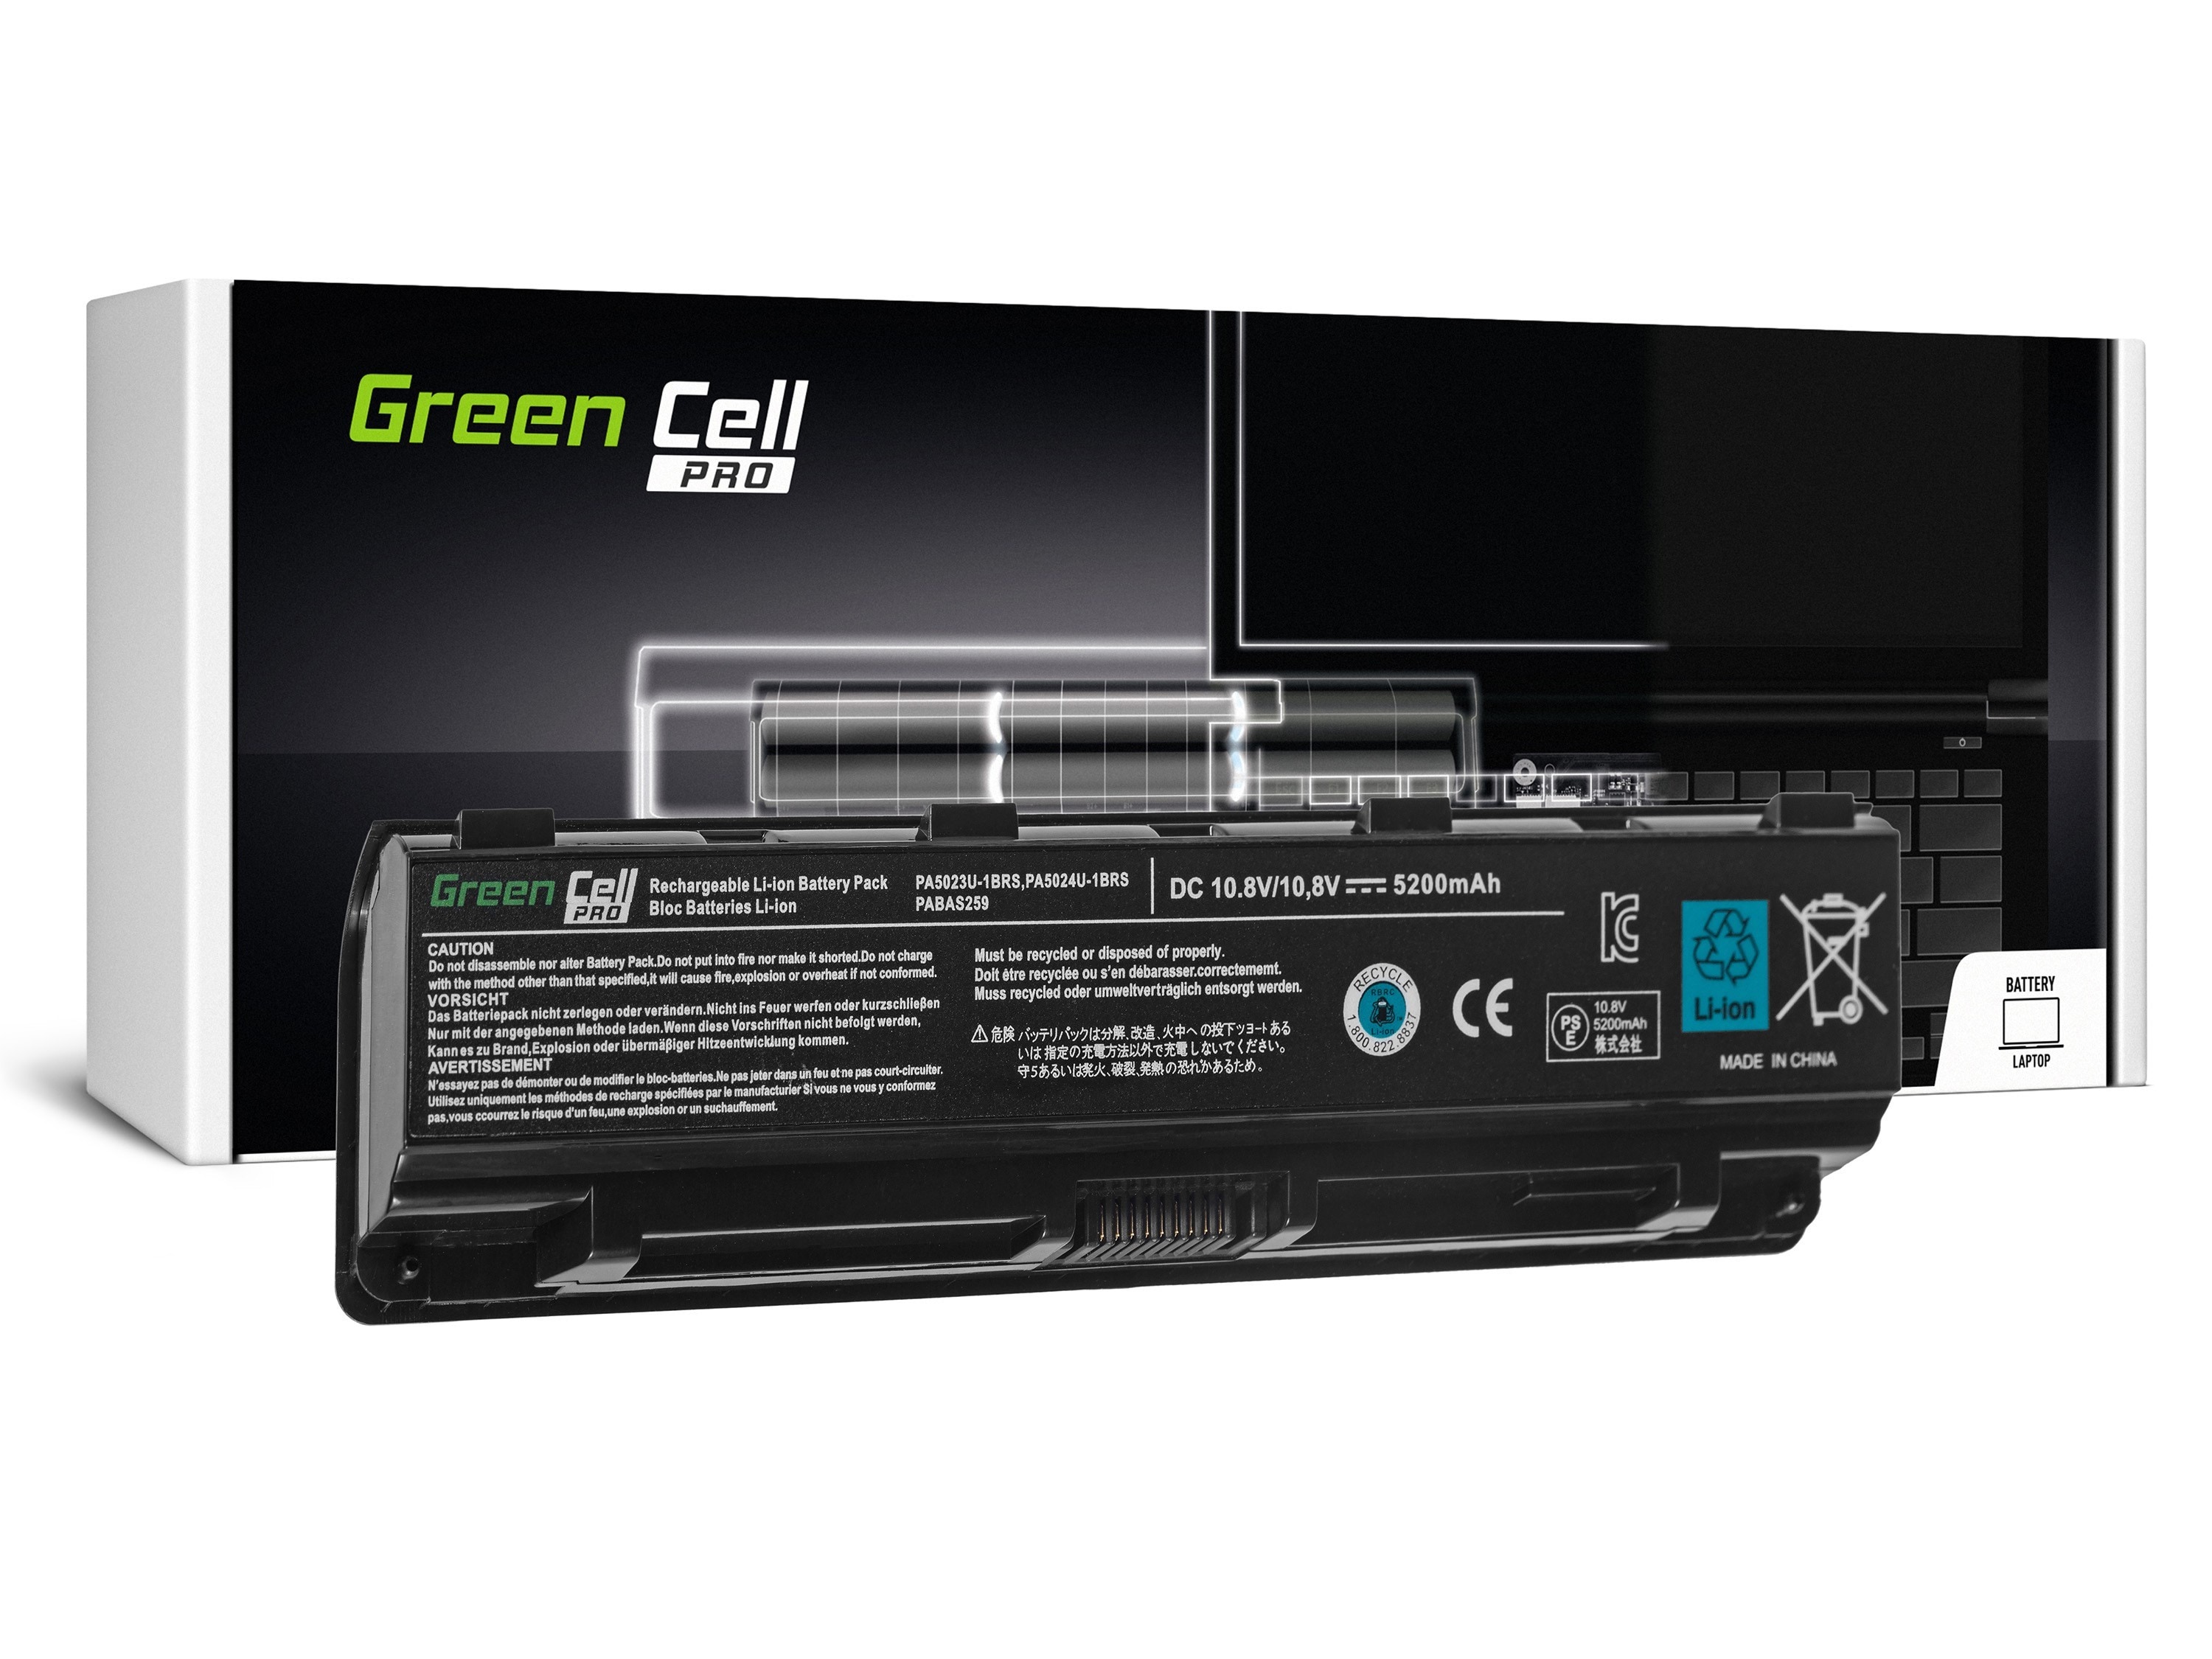 Green Cell PRO laptopbatteri til Toshiba Satellite C850 C855 C870 L850